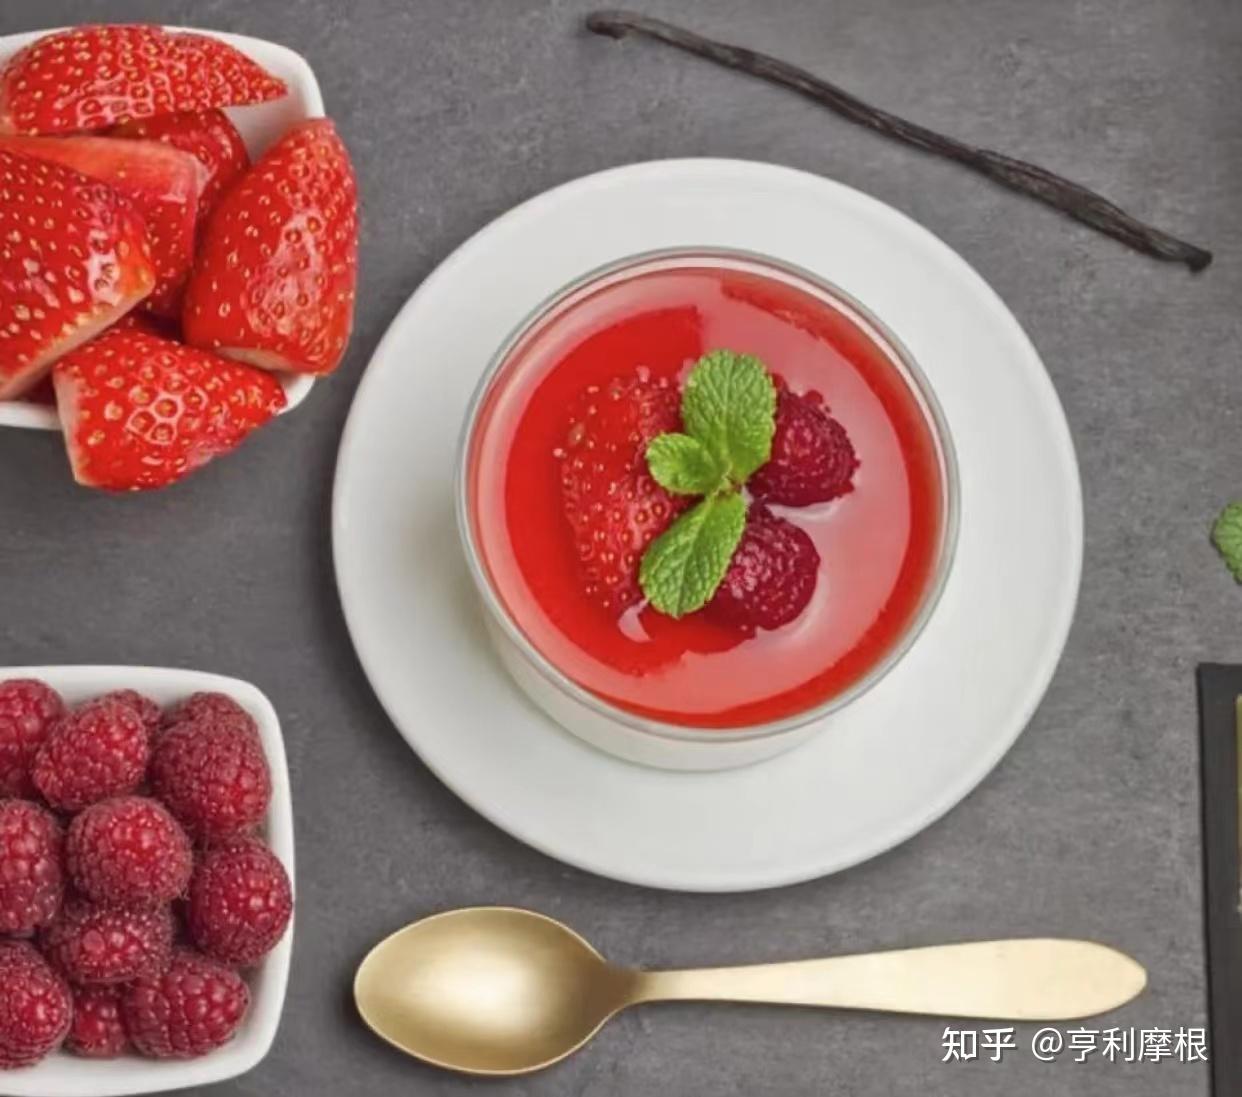 【食譜】西谷米草莓布丁:www.ytower.com.tw